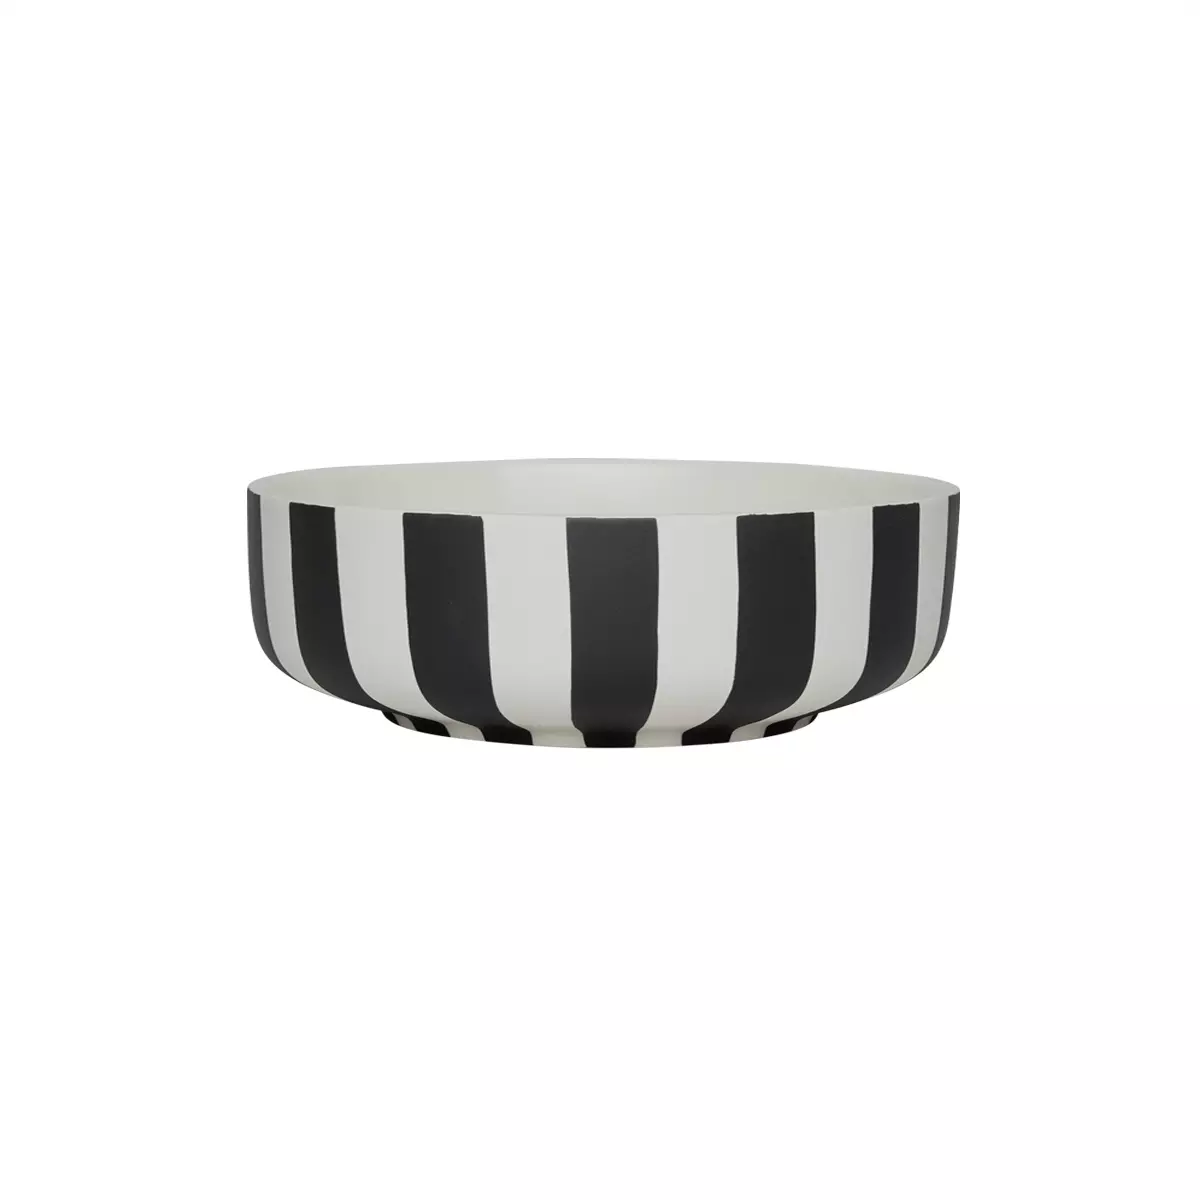 Oyoy Living Toppu Bowl Large Black-White